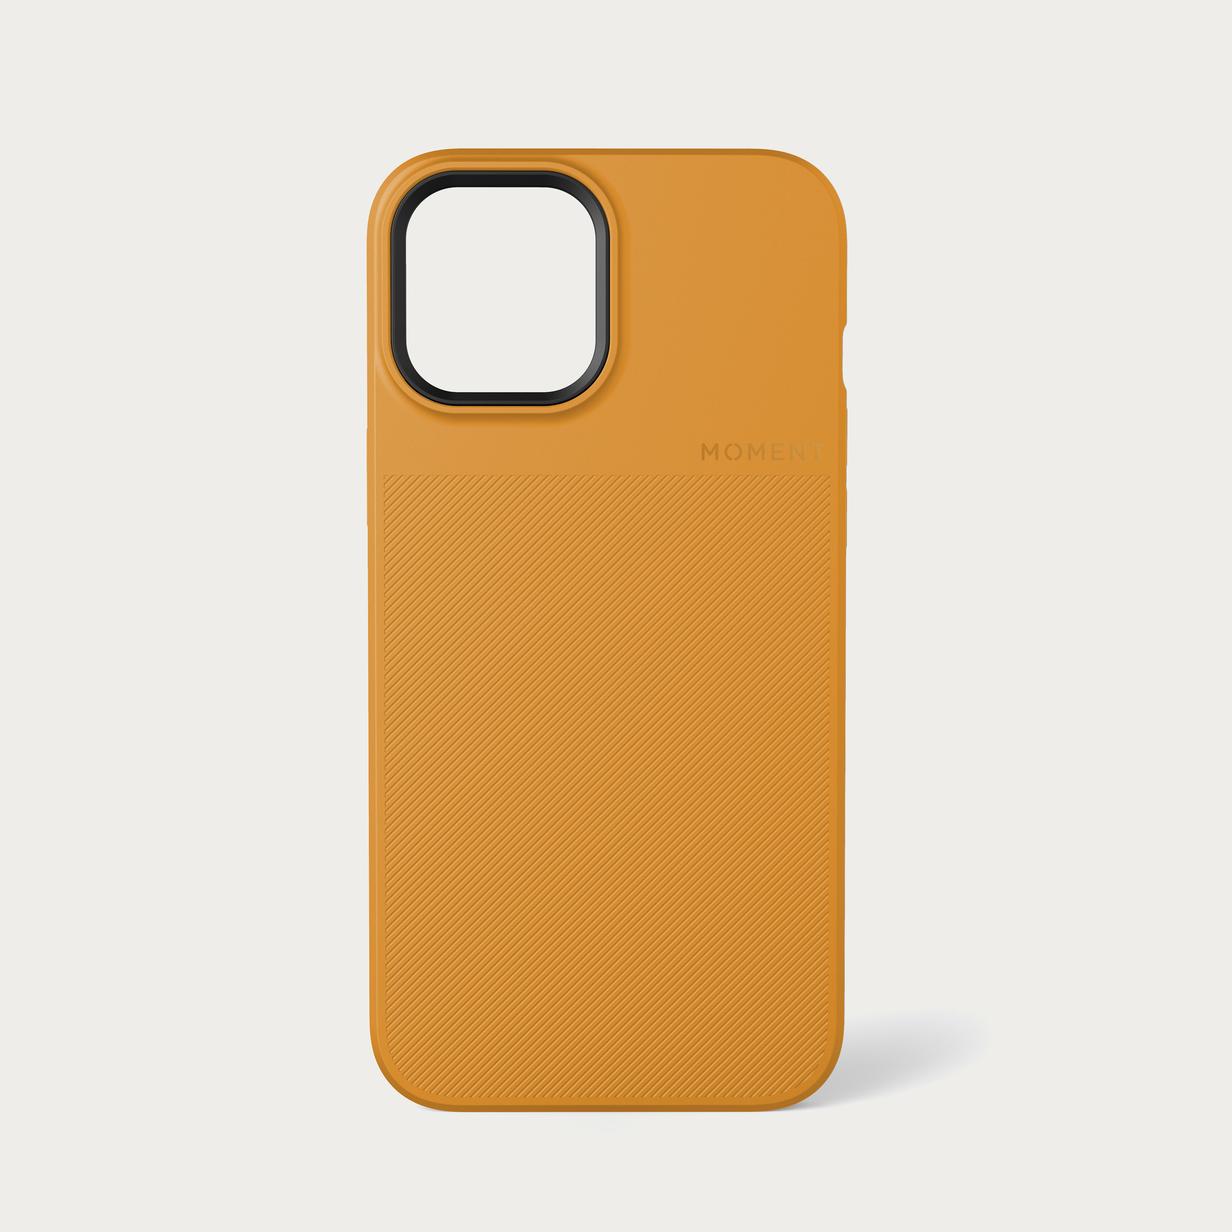 311 128 Moment i Phone12 Pro Max Thin Case Mustard Yellow 1 back